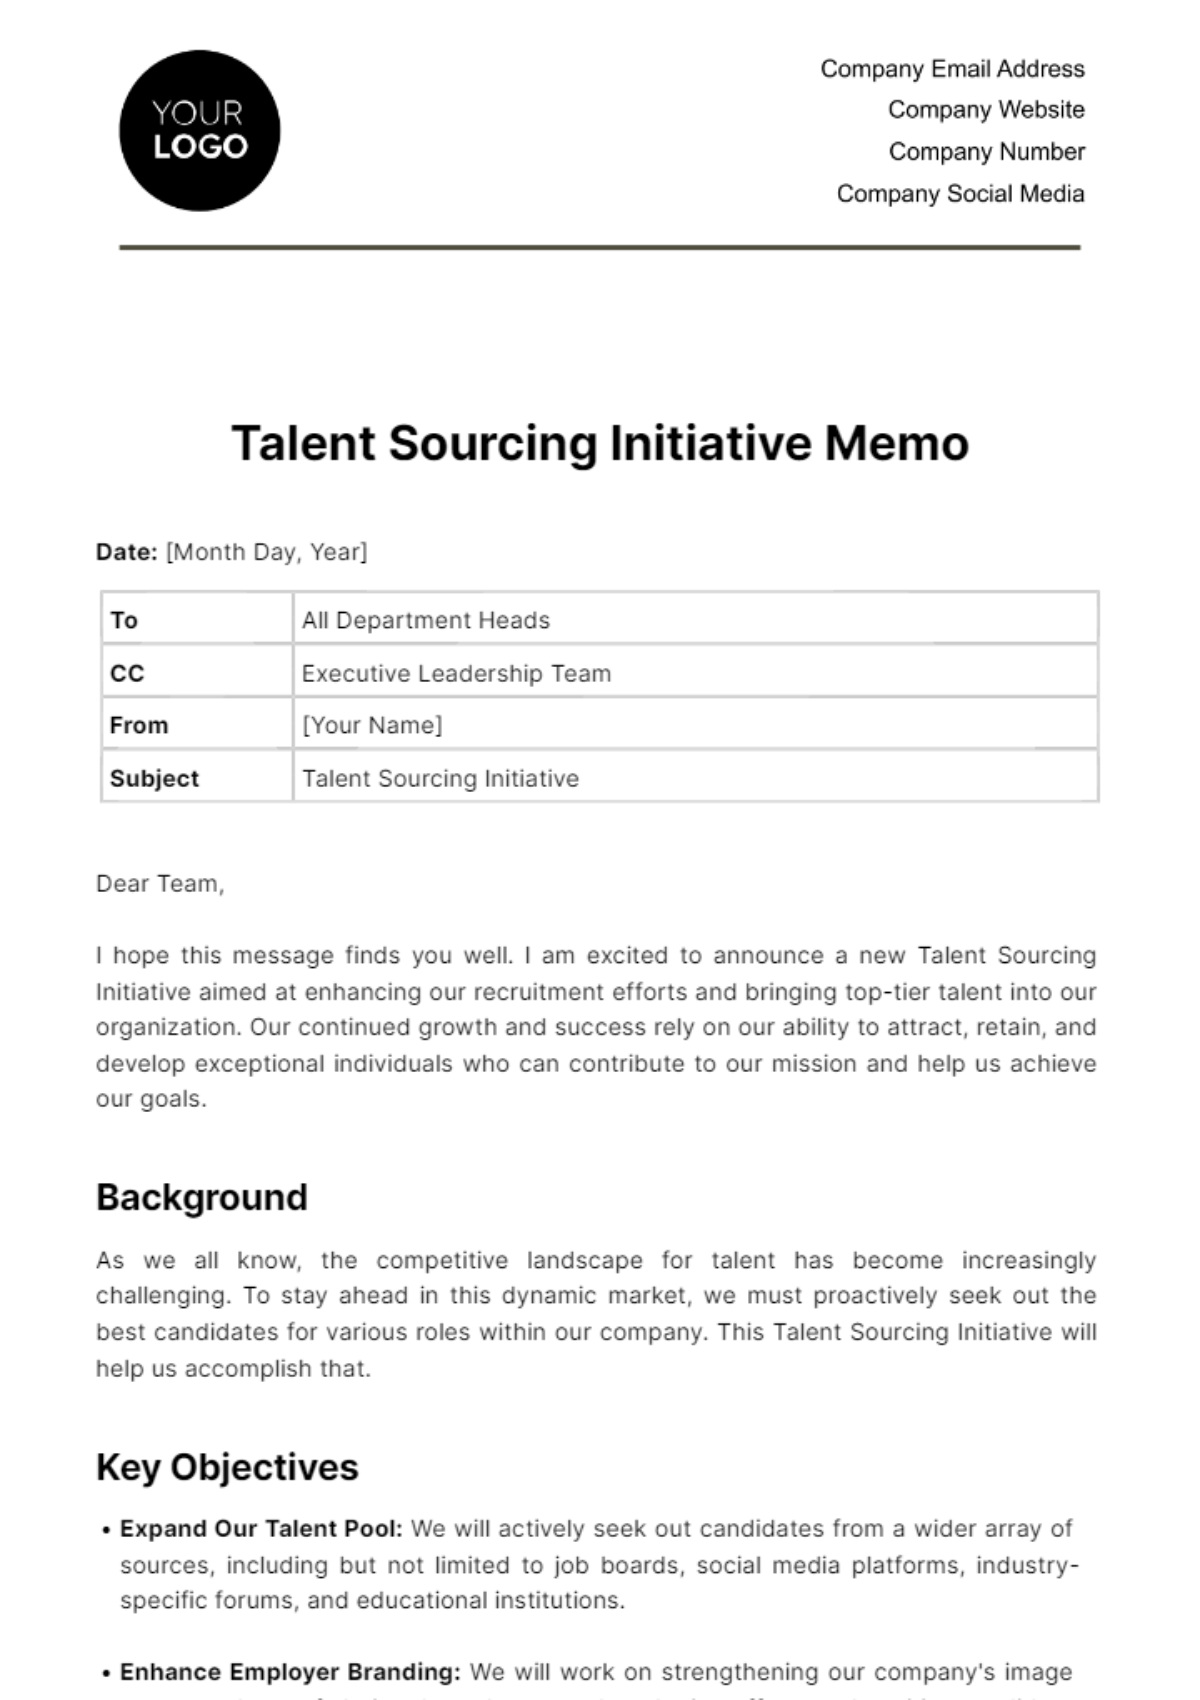 Talent Sourcing Initiative Memo HR Template